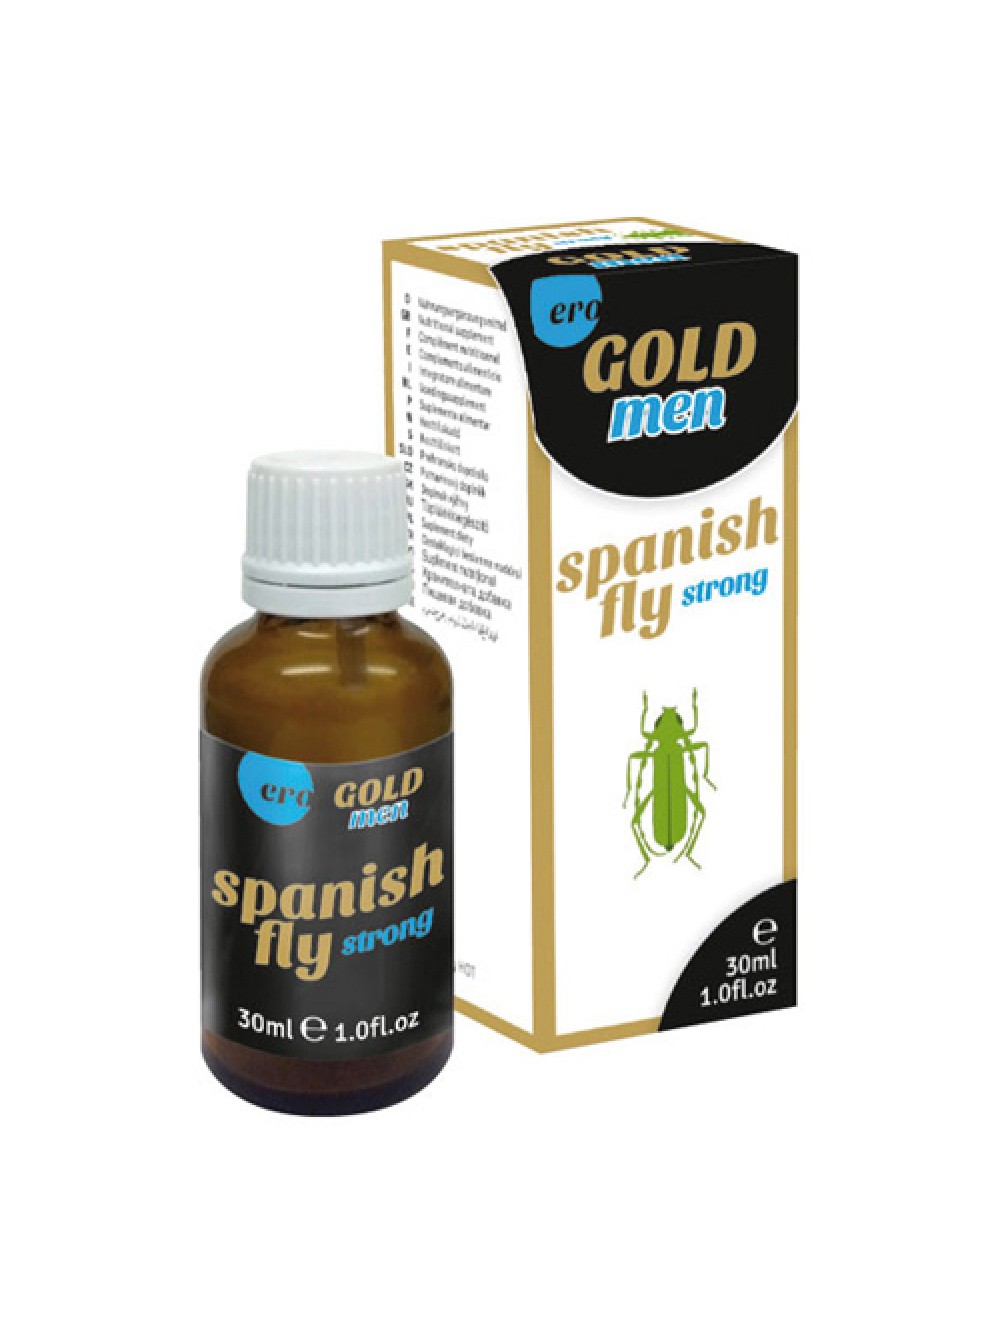 Stimulant Spanish Fly Homme GOLD strong - 30 ml